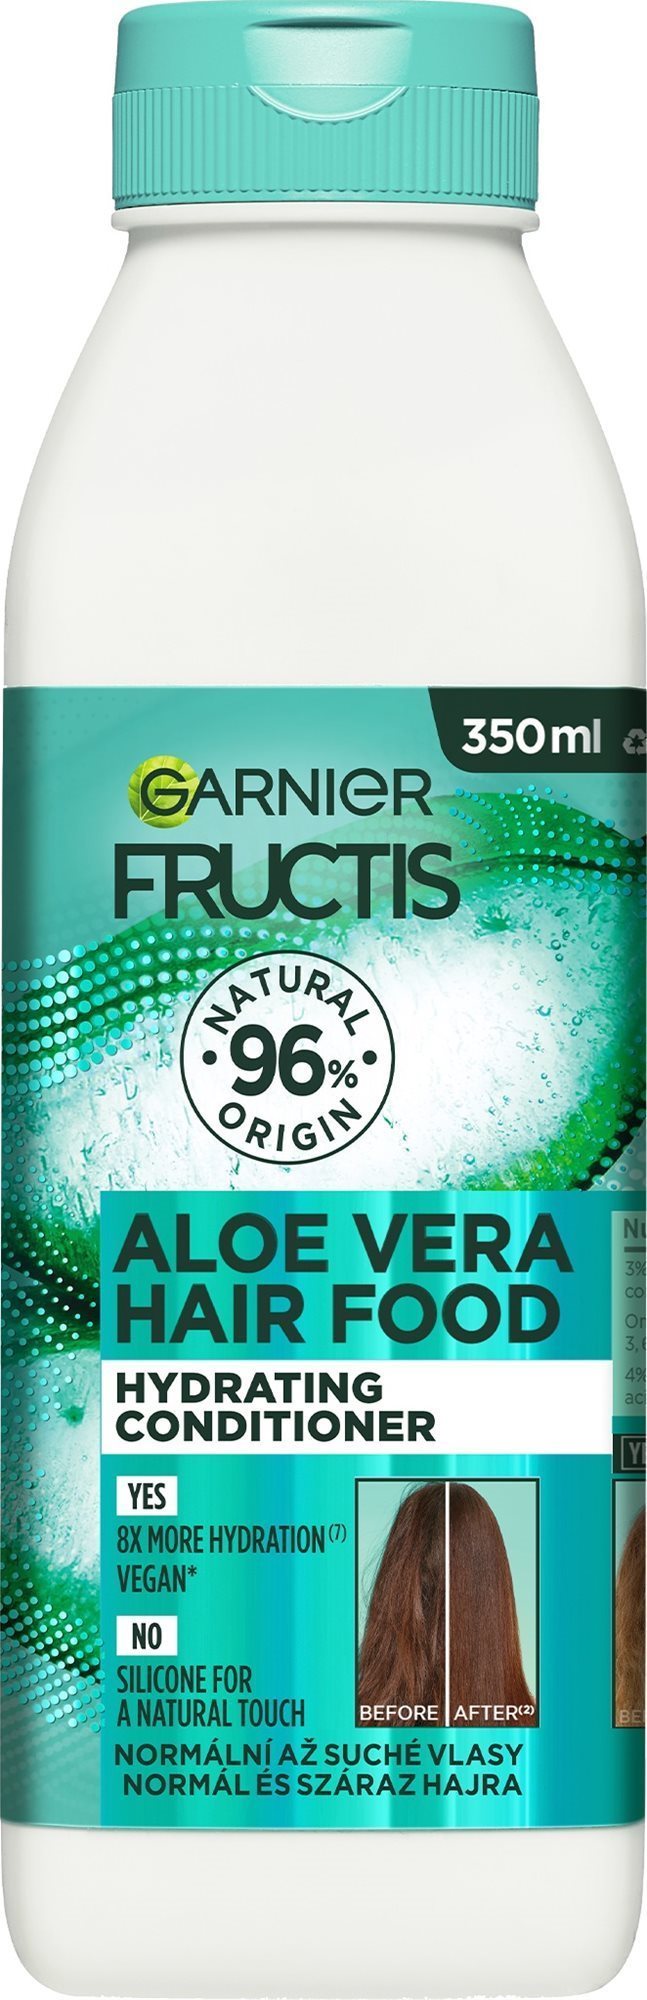 GARNIER Fructis Hair Food Aloe Vera balzsam 350 ml